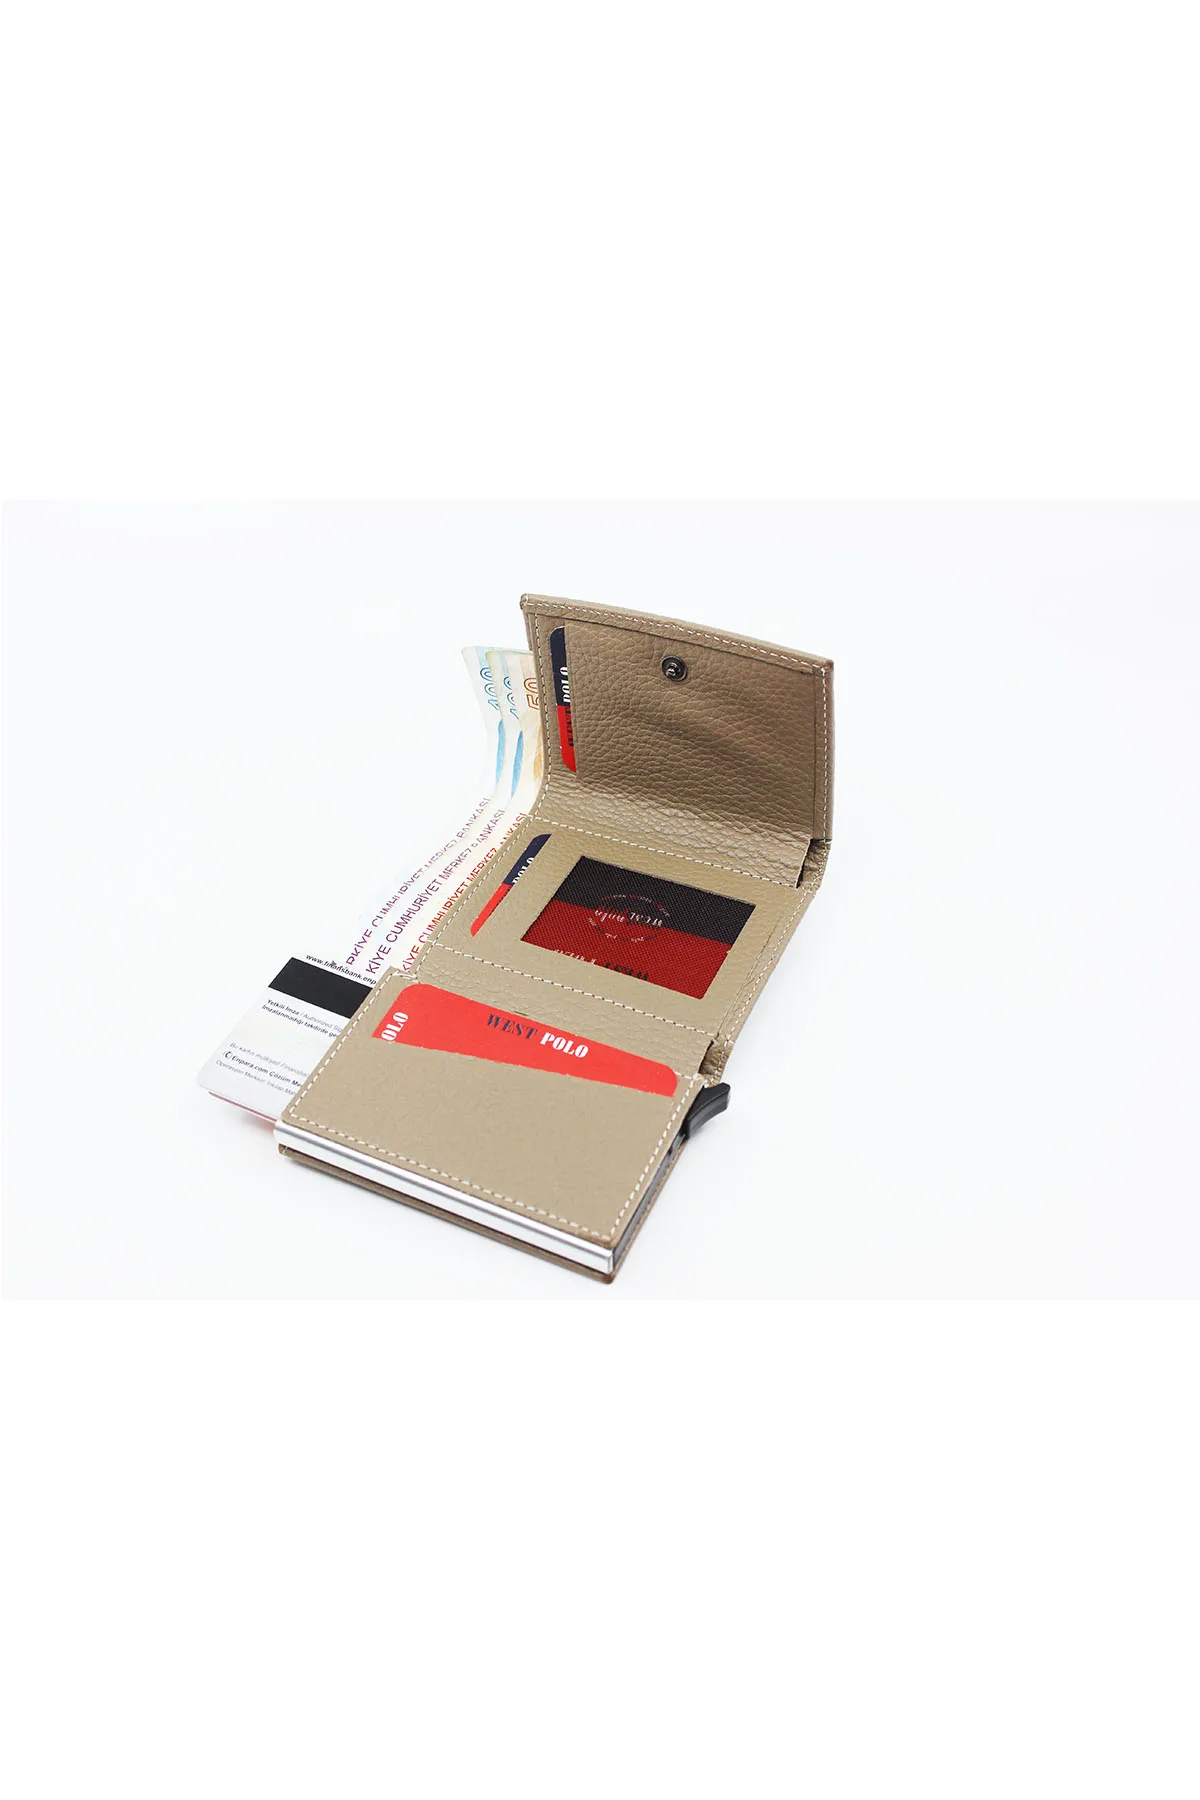 Запад поло, норковая кожа, Mekanizmalı Money-Eyed, мужской кошелек, бумажник для карт W22045550 от AliExpress WW